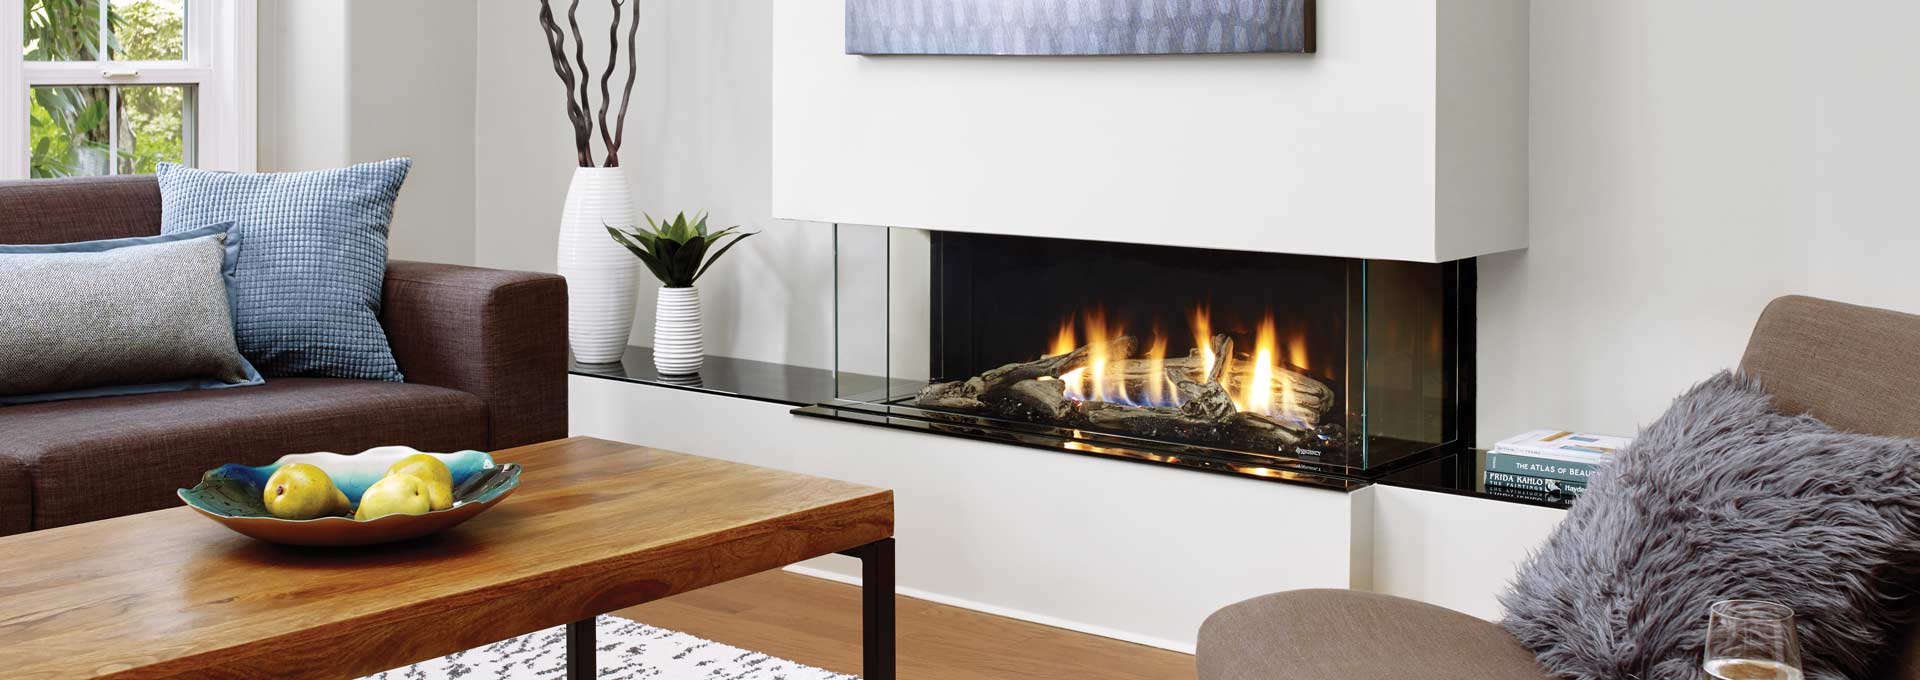 Regency Fireplace Products Australia Gas Wood Fireplaces